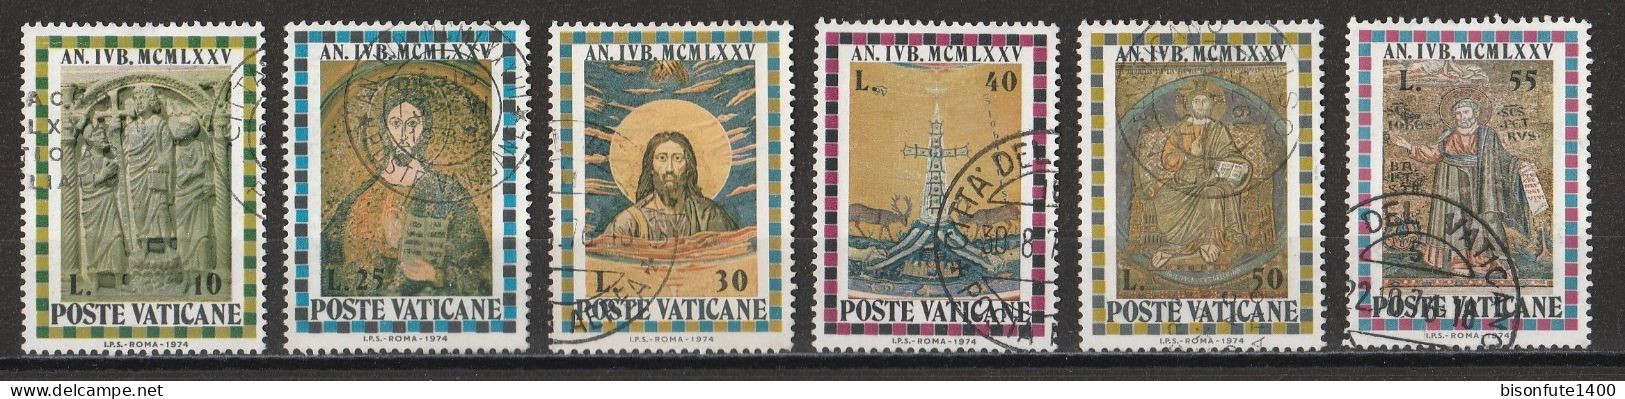 Vatican 1975 : Timbres Yvert & Tellier N° 582 - 583 - 584 - 585 - 586 - 587 - 588 - 589 - 590 - 591 Et 592 Oblitérés. - Gebraucht